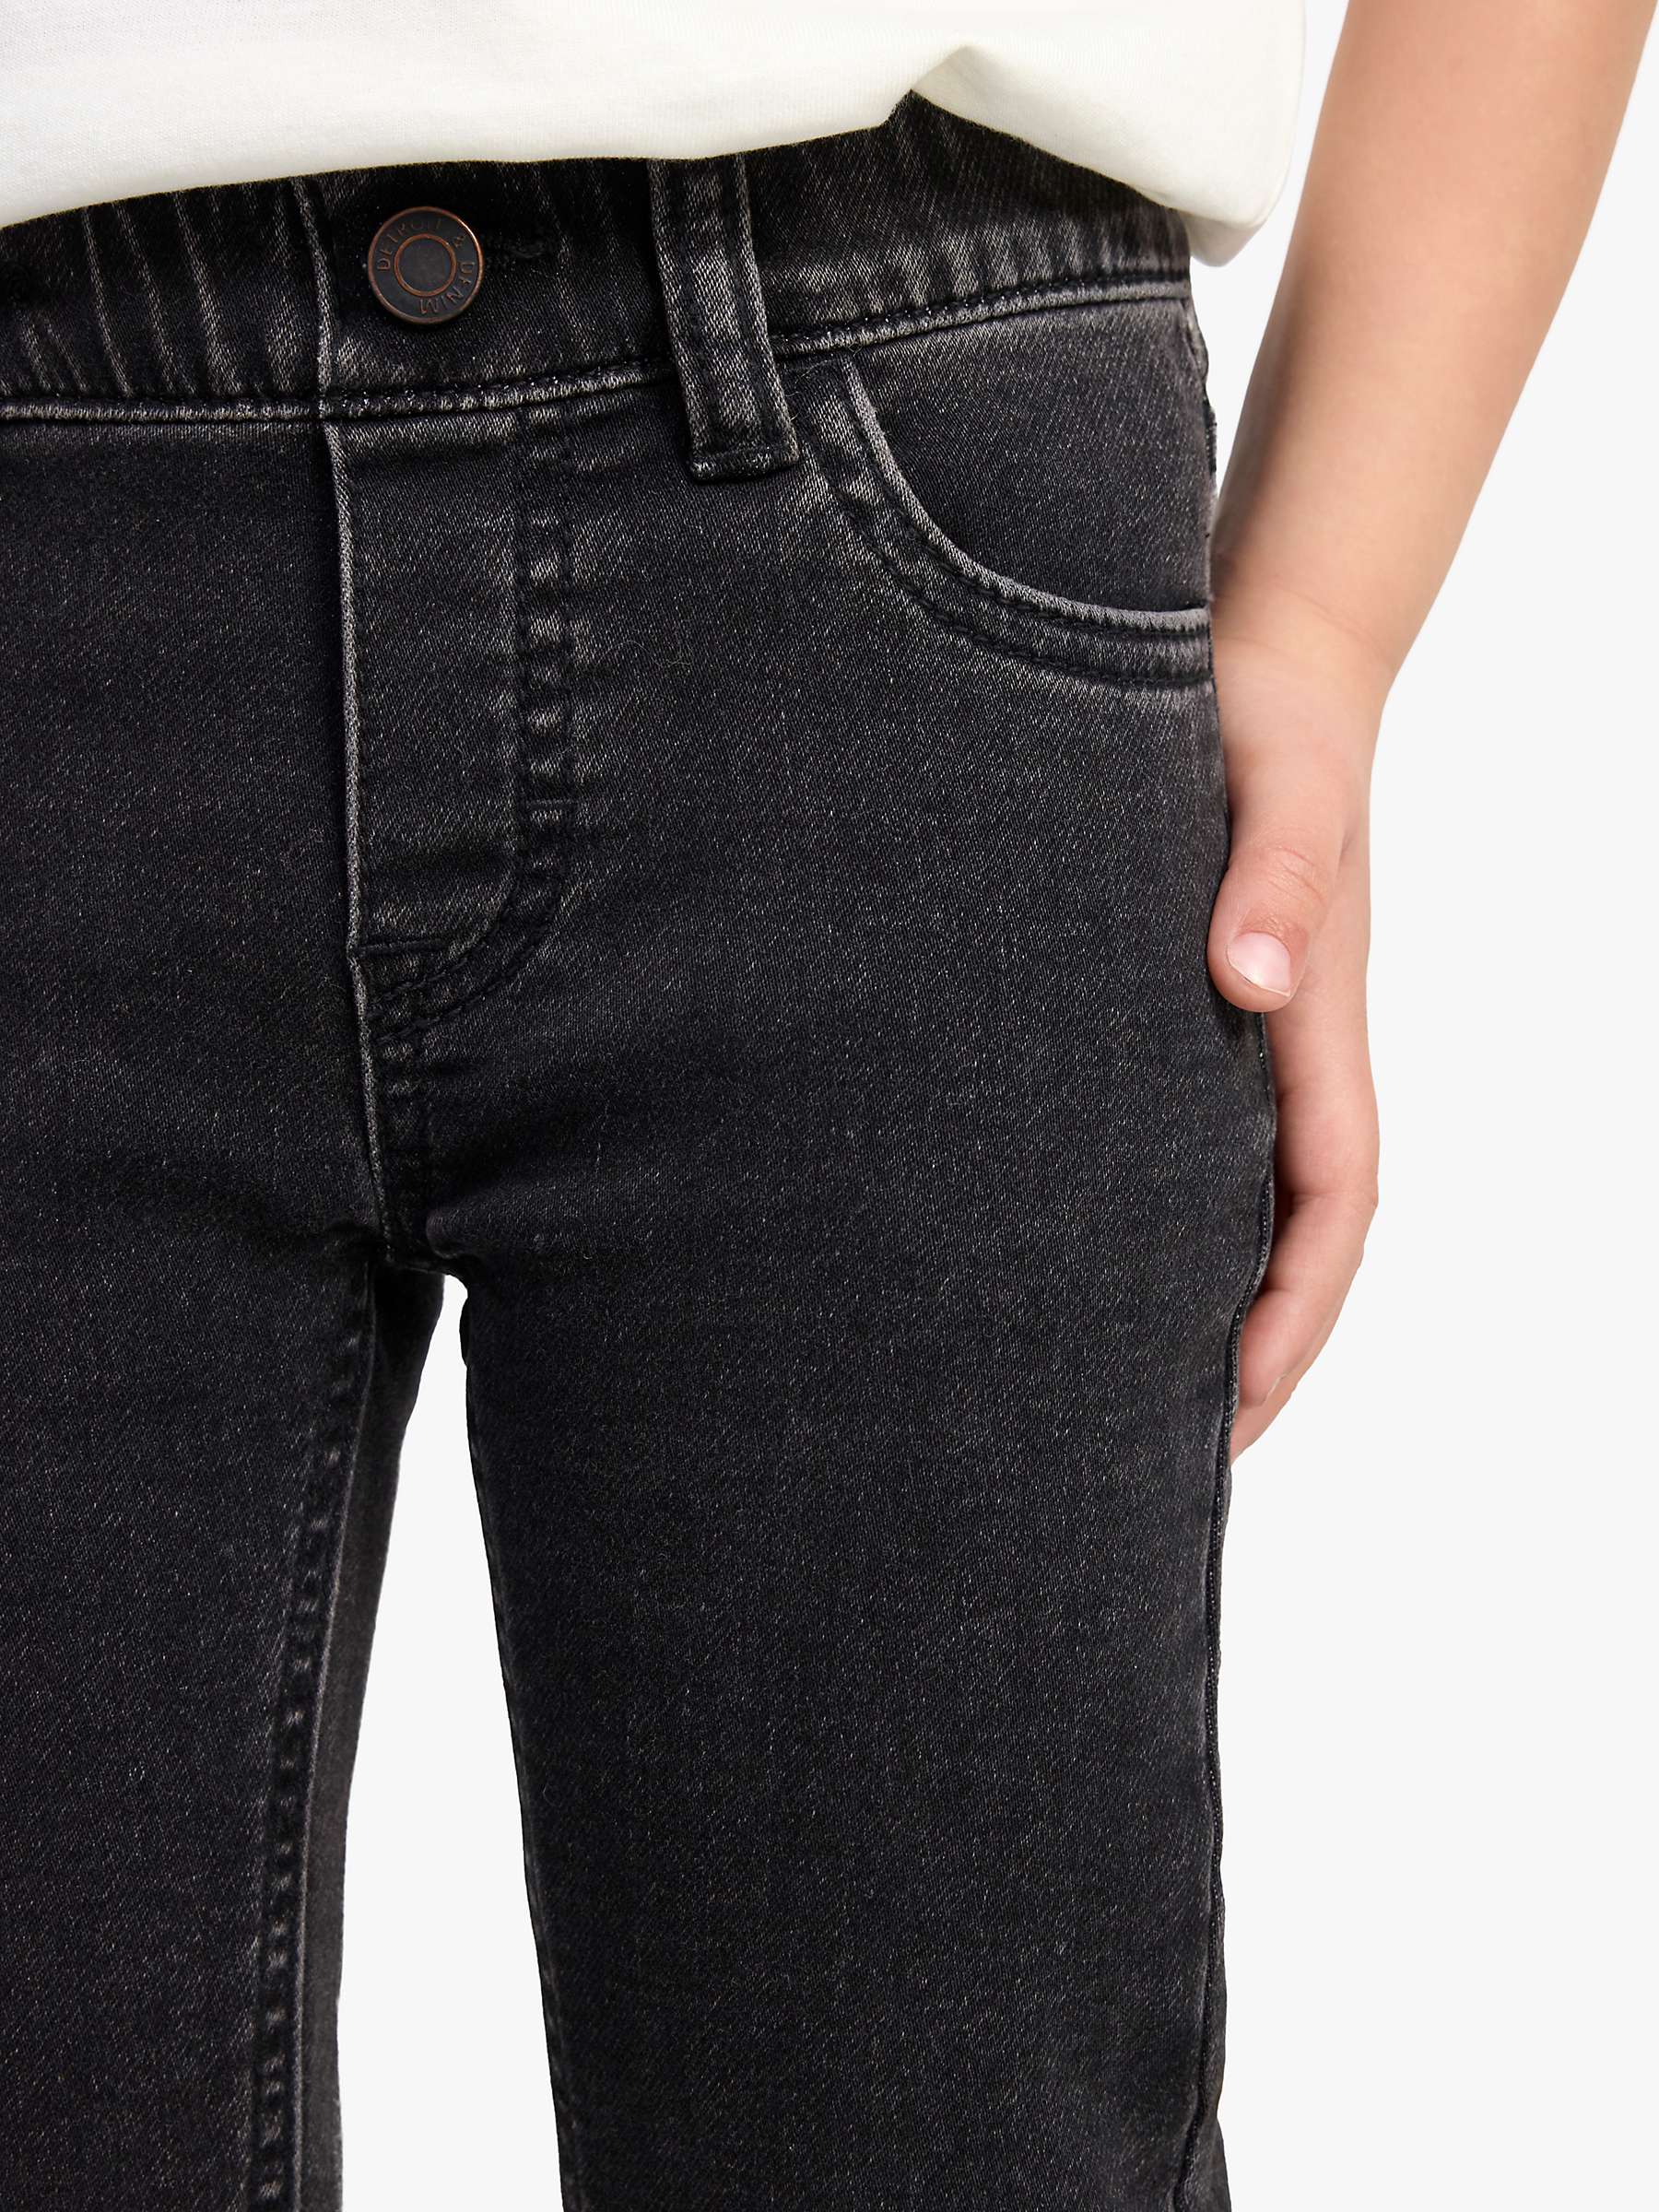 Buy Lindex Kids' Slim Leg Denim Jeans, Black Online at johnlewis.com